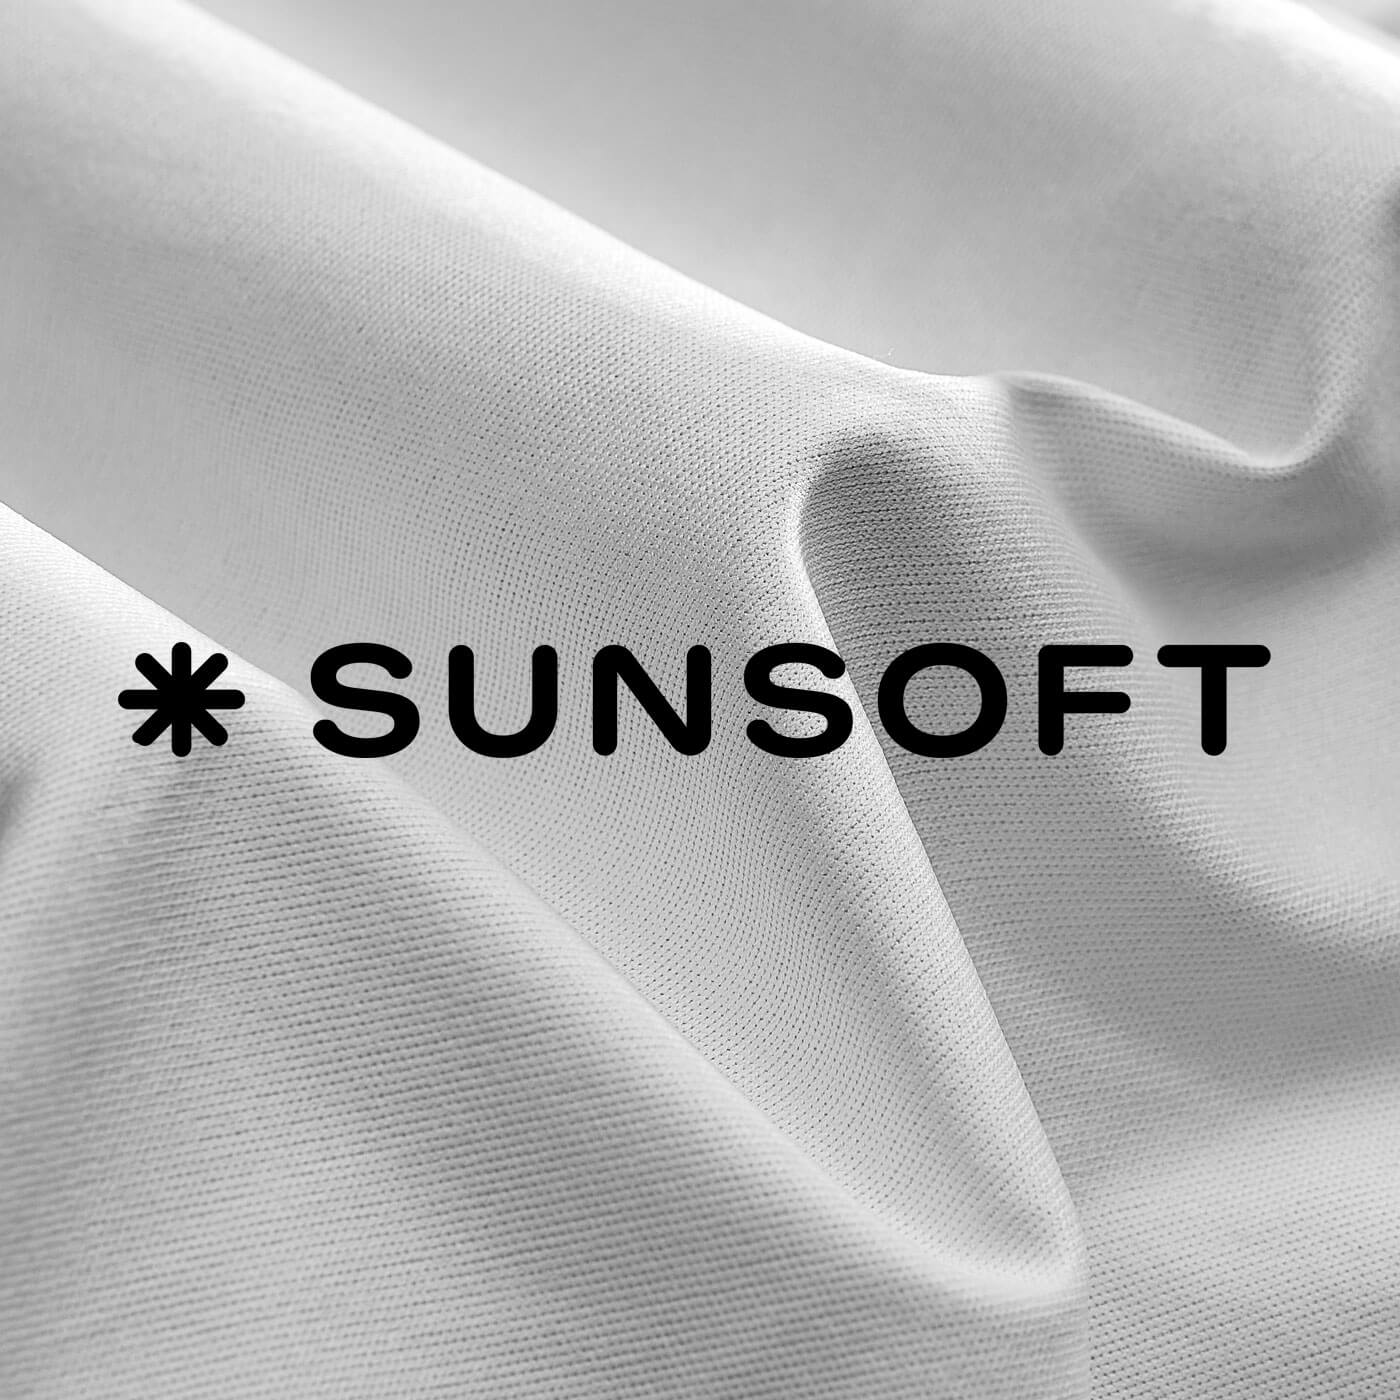 BlackStrap SUNSOFT Fabric is featured on performance shirts, sun hoodies, and sun shirts.